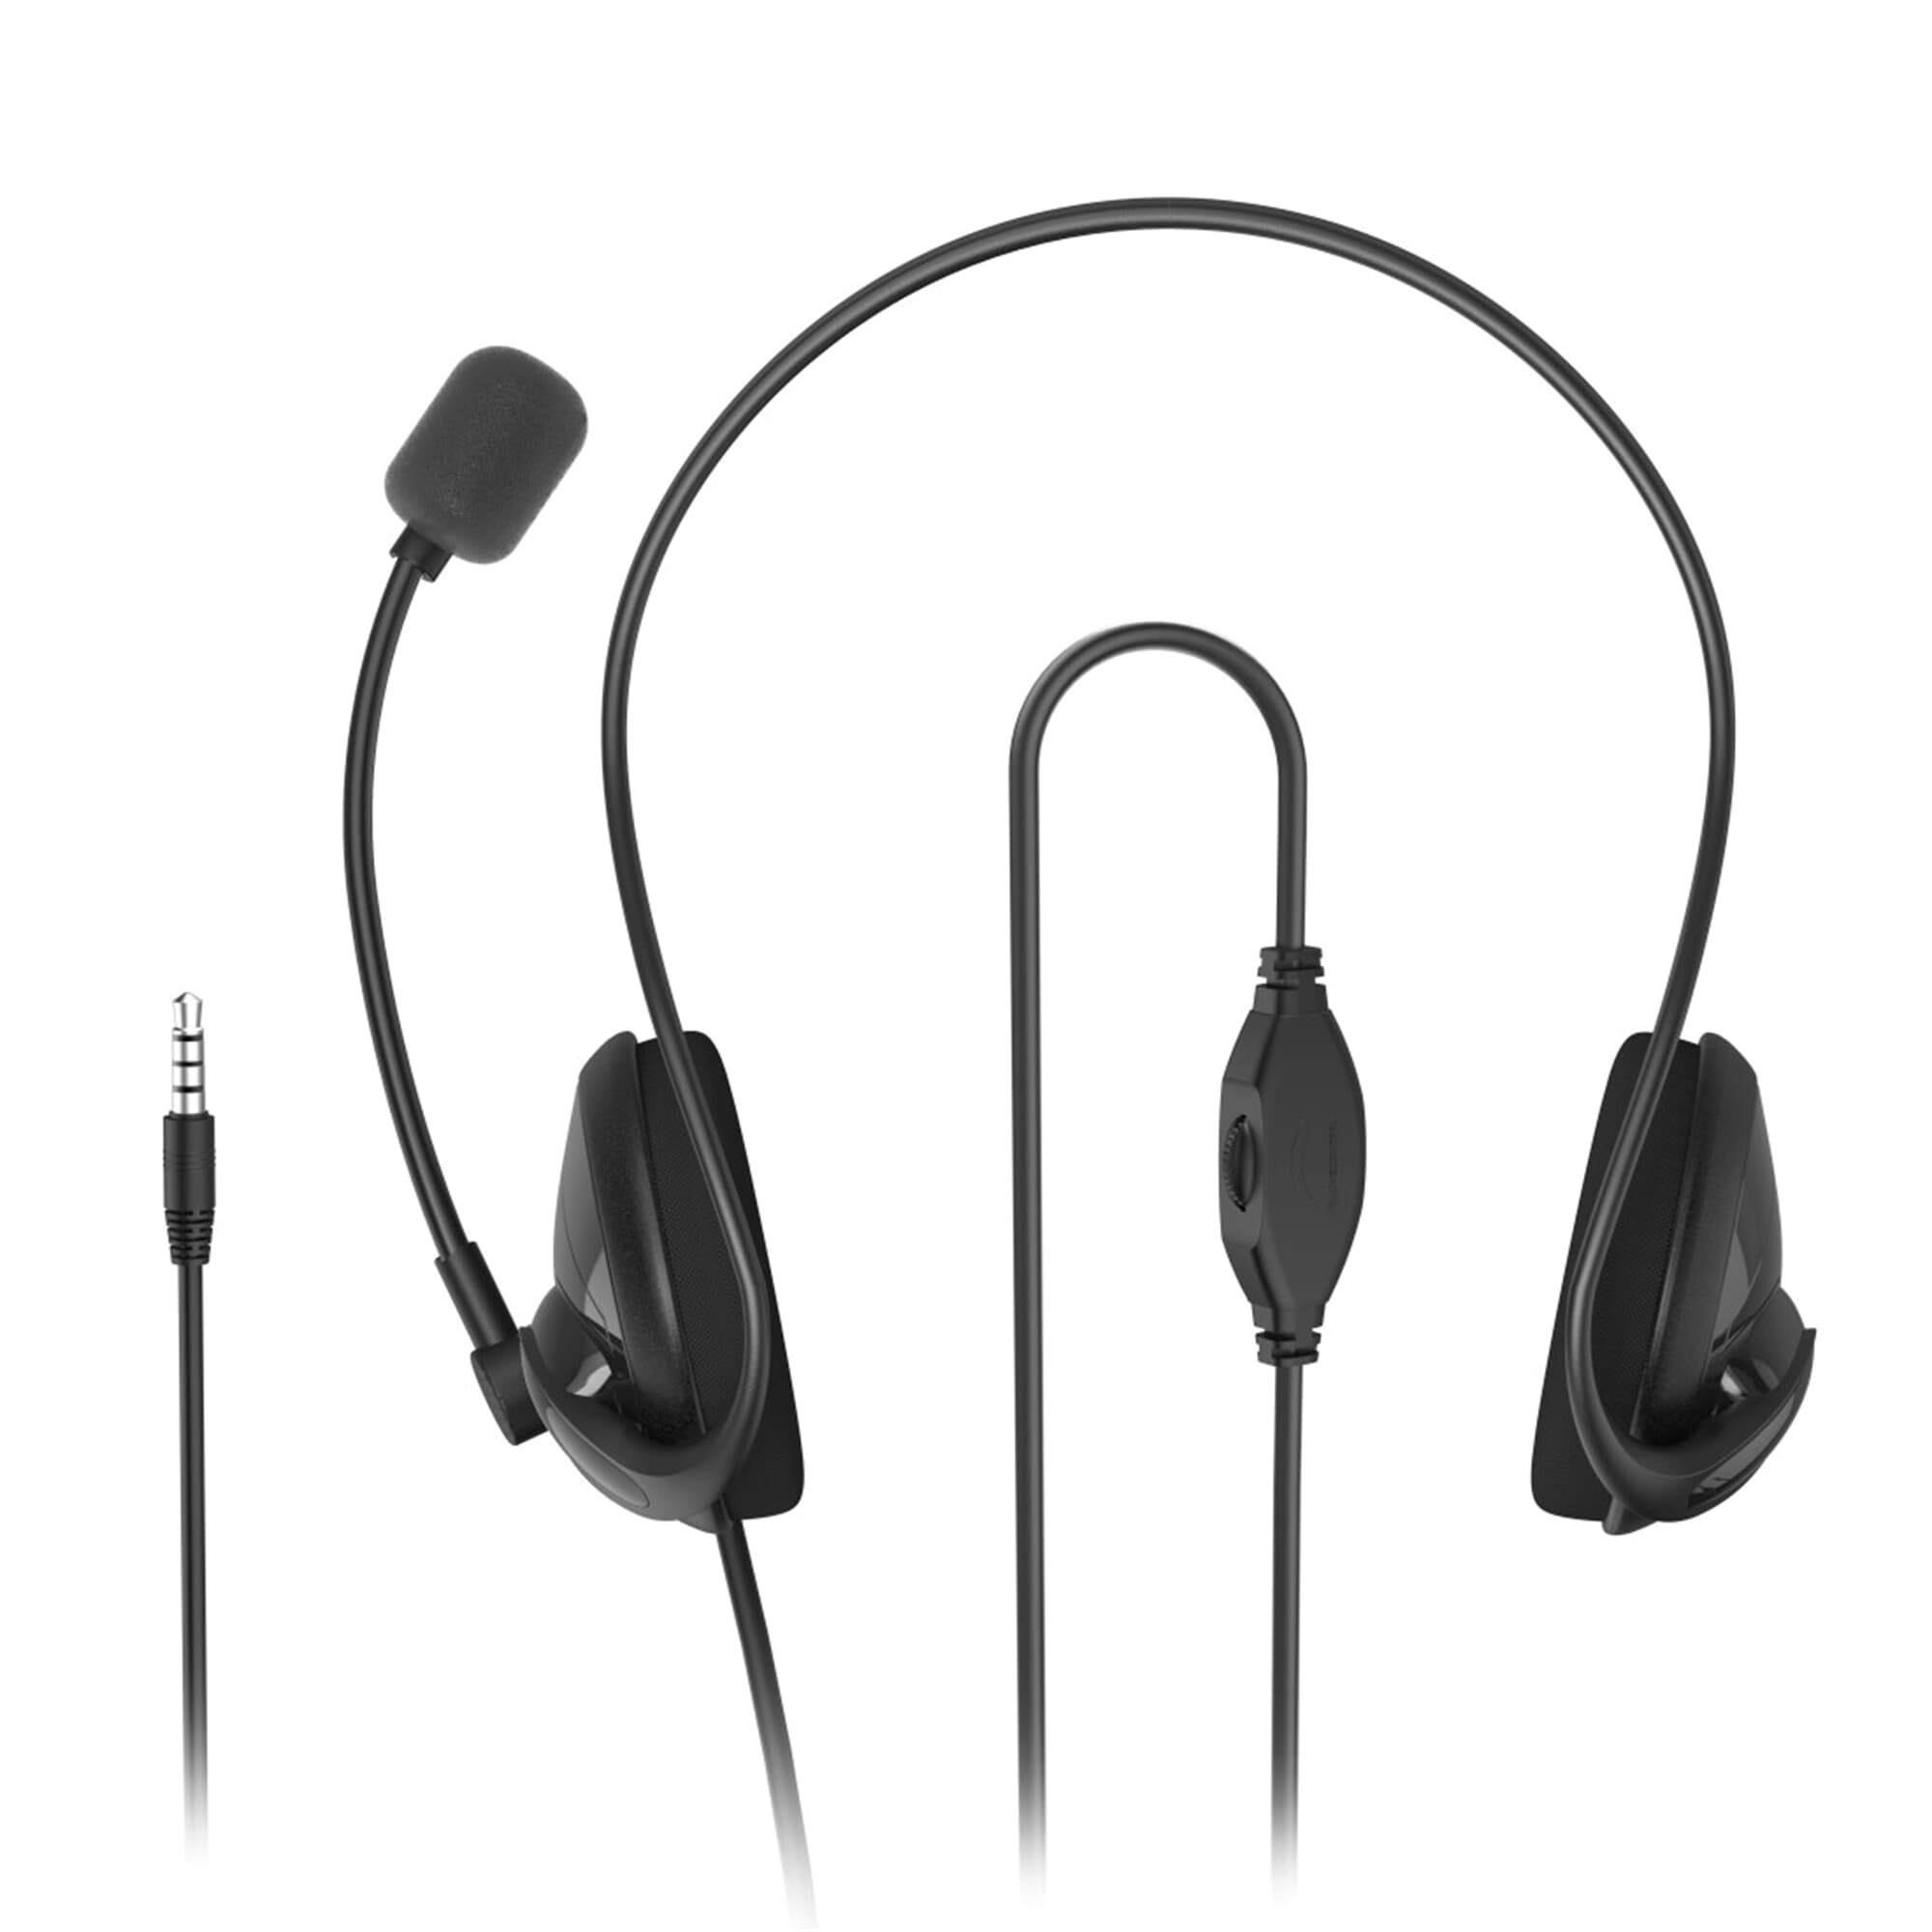 HAMA NHS-P100 Headset On-ear V2, Schwarz